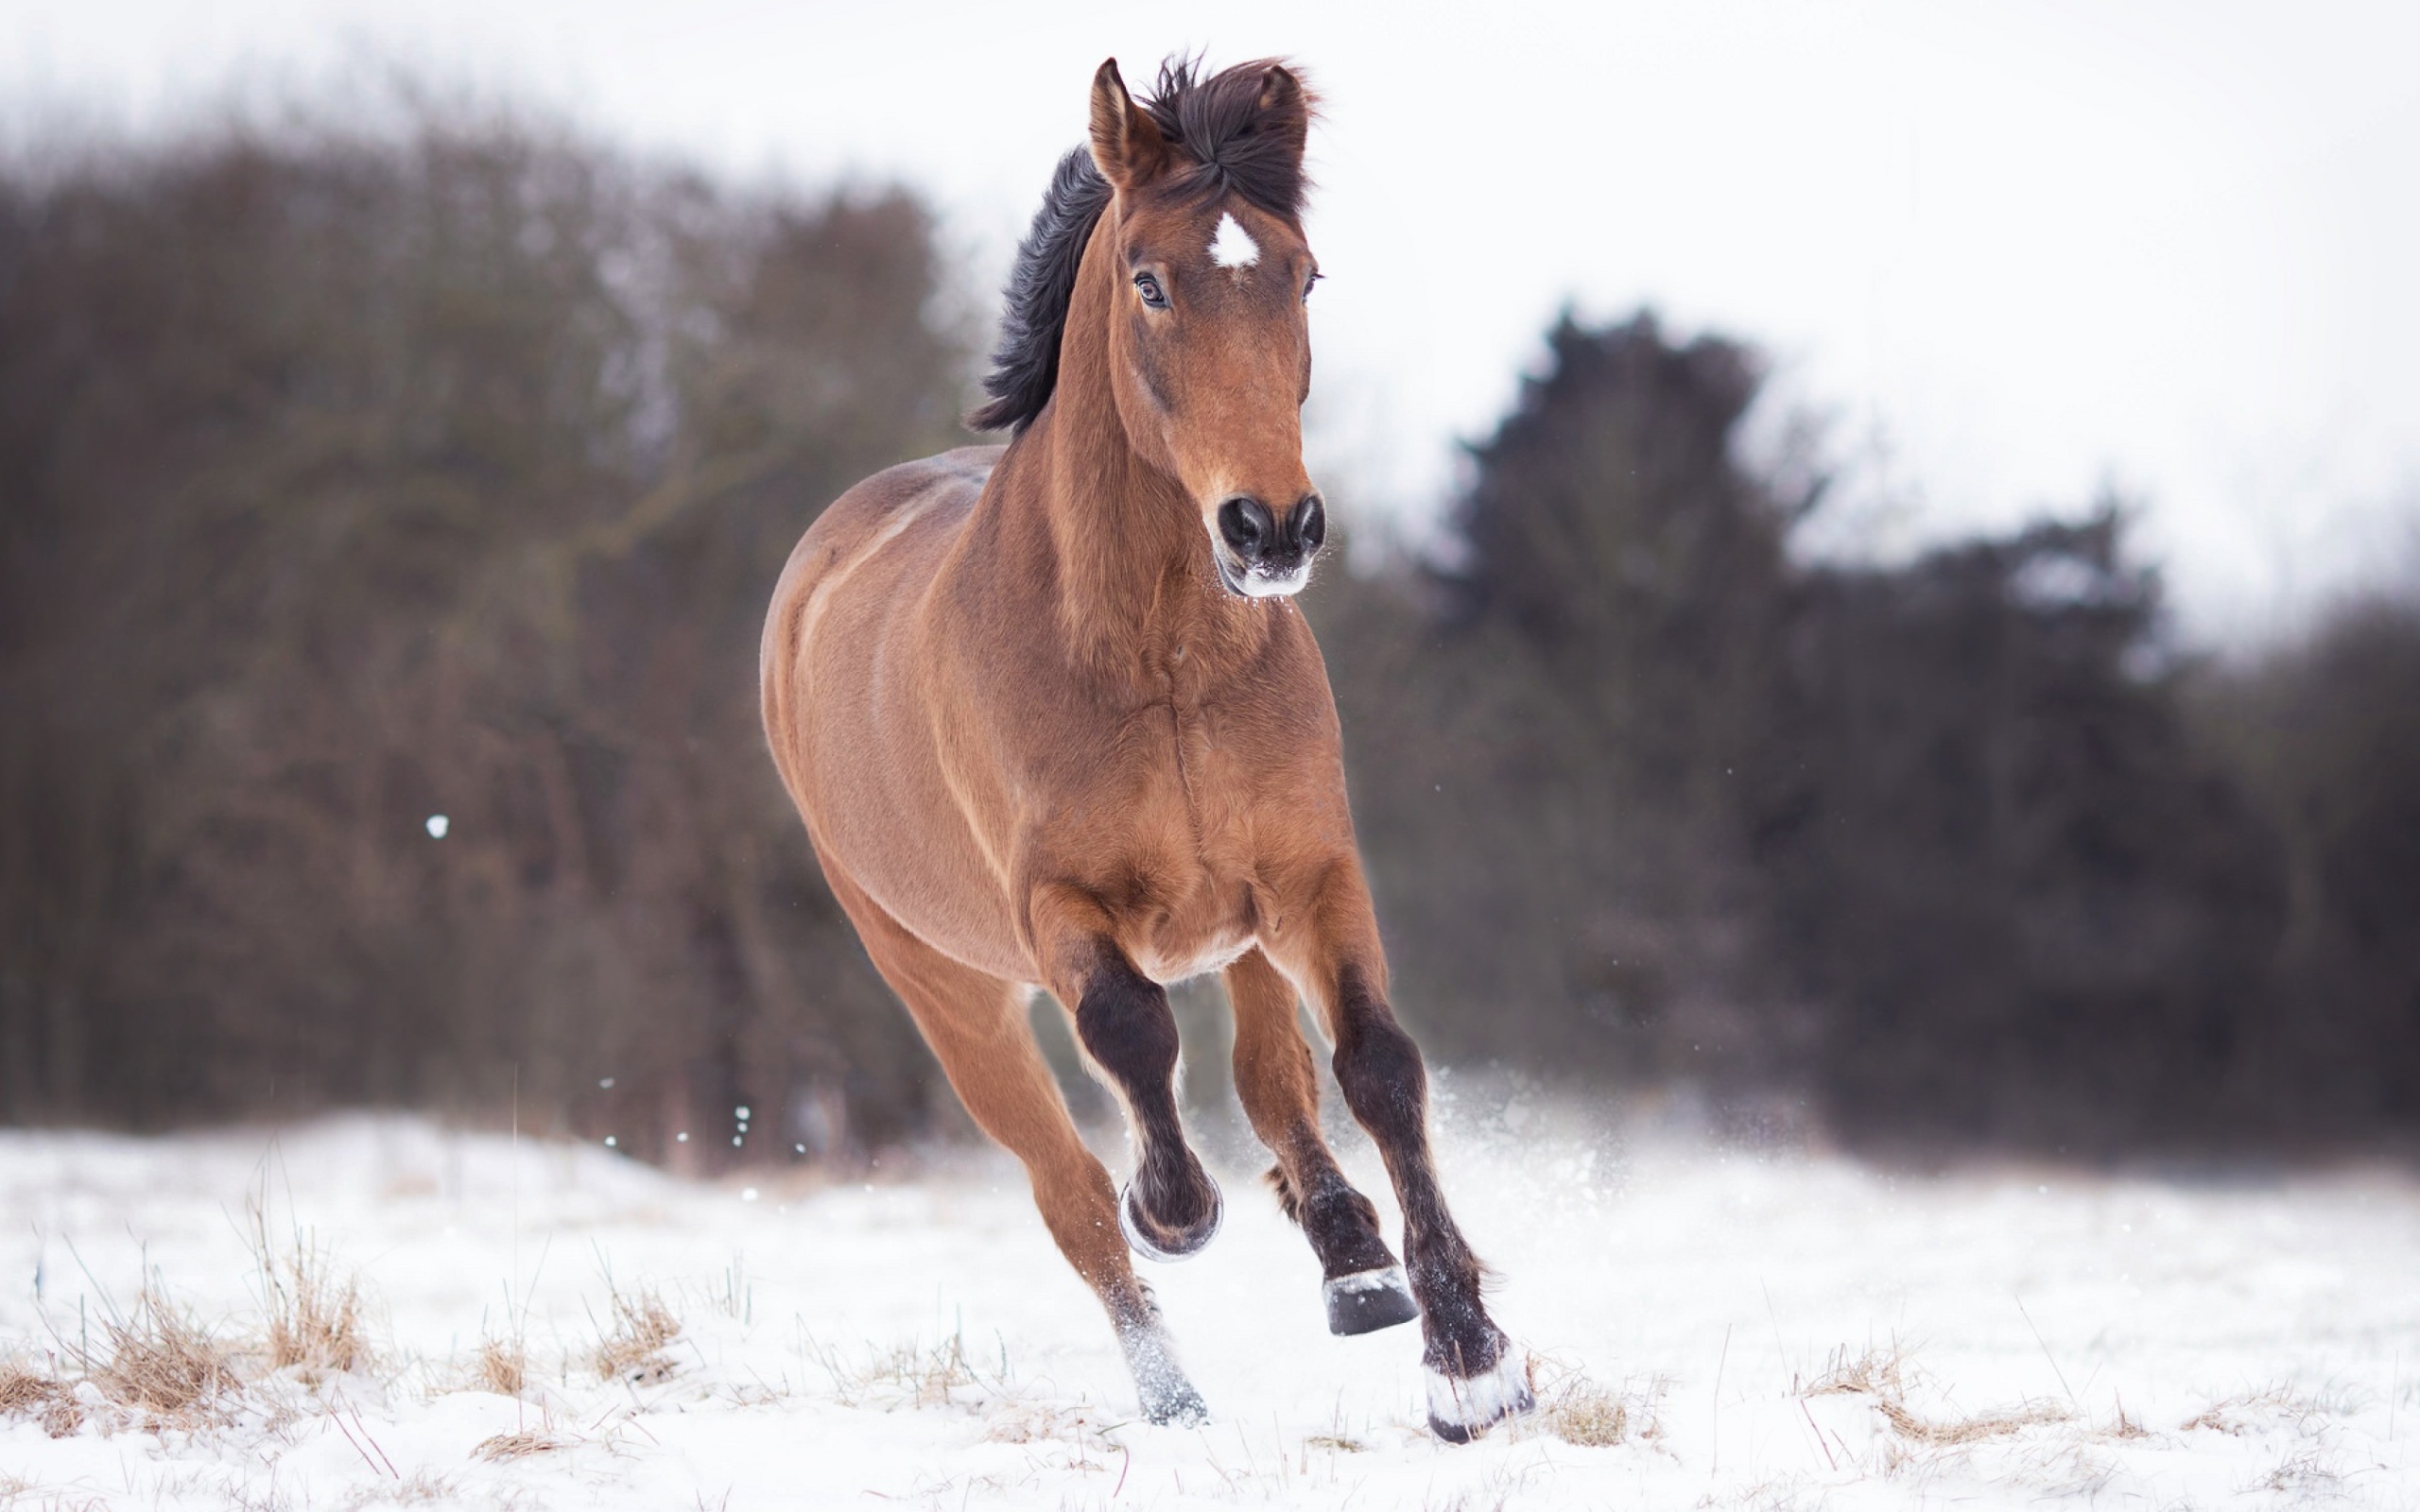 A brown horse runs through the snow